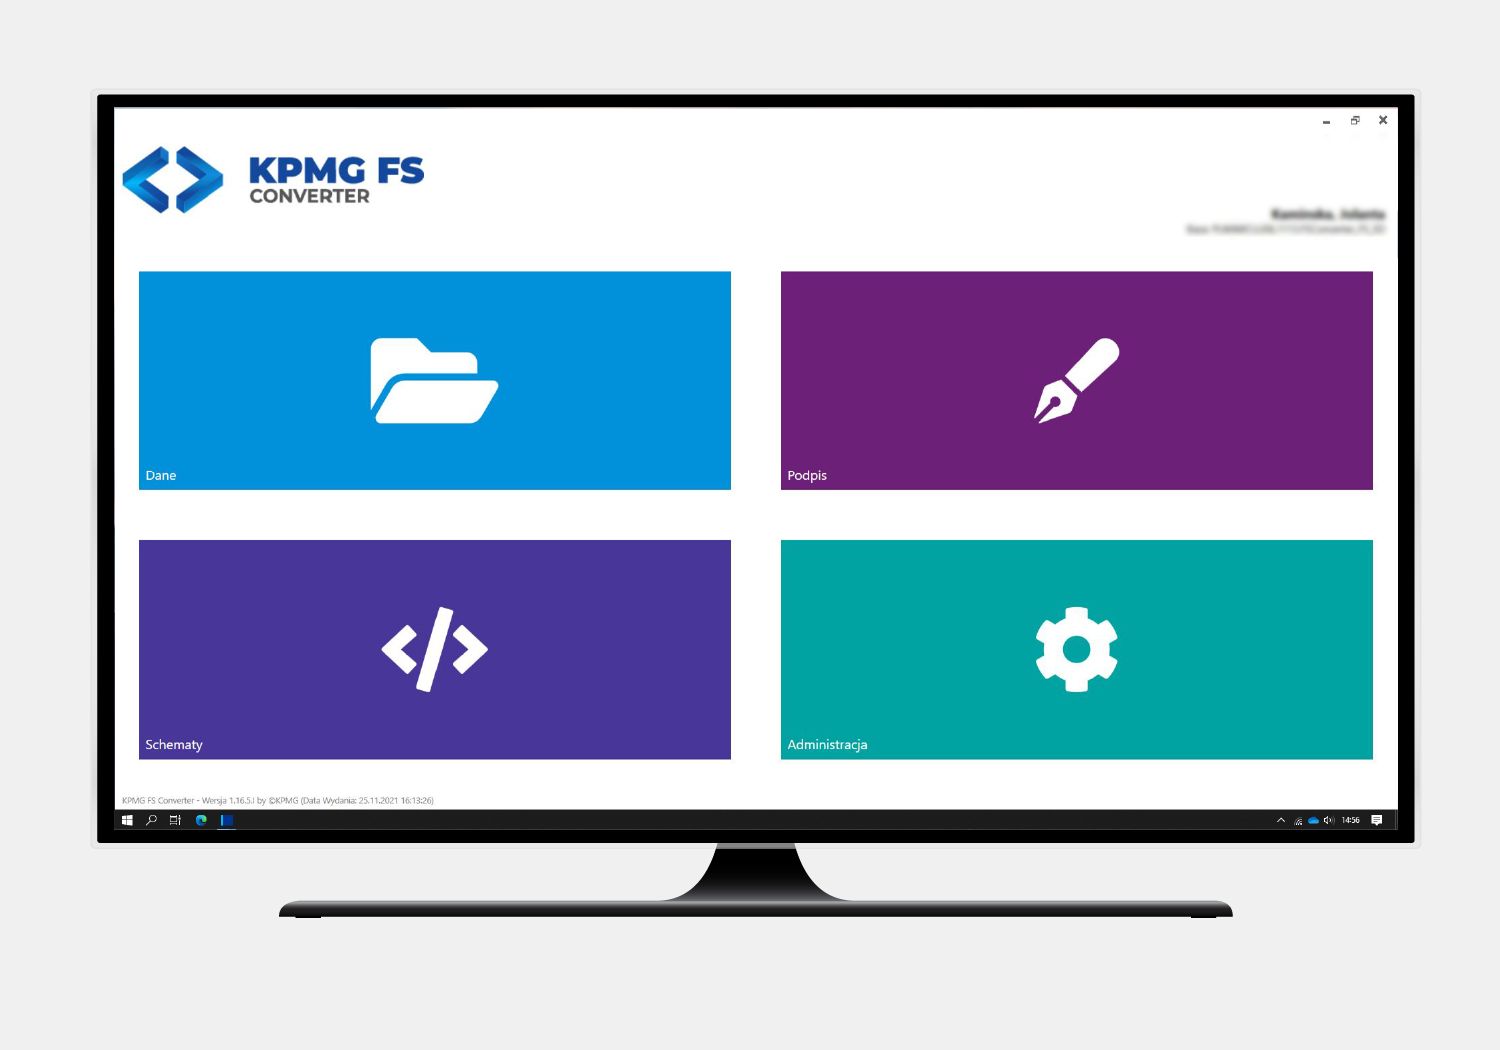 ekran komputera z otwartą aplikacją KPMG FS Converter